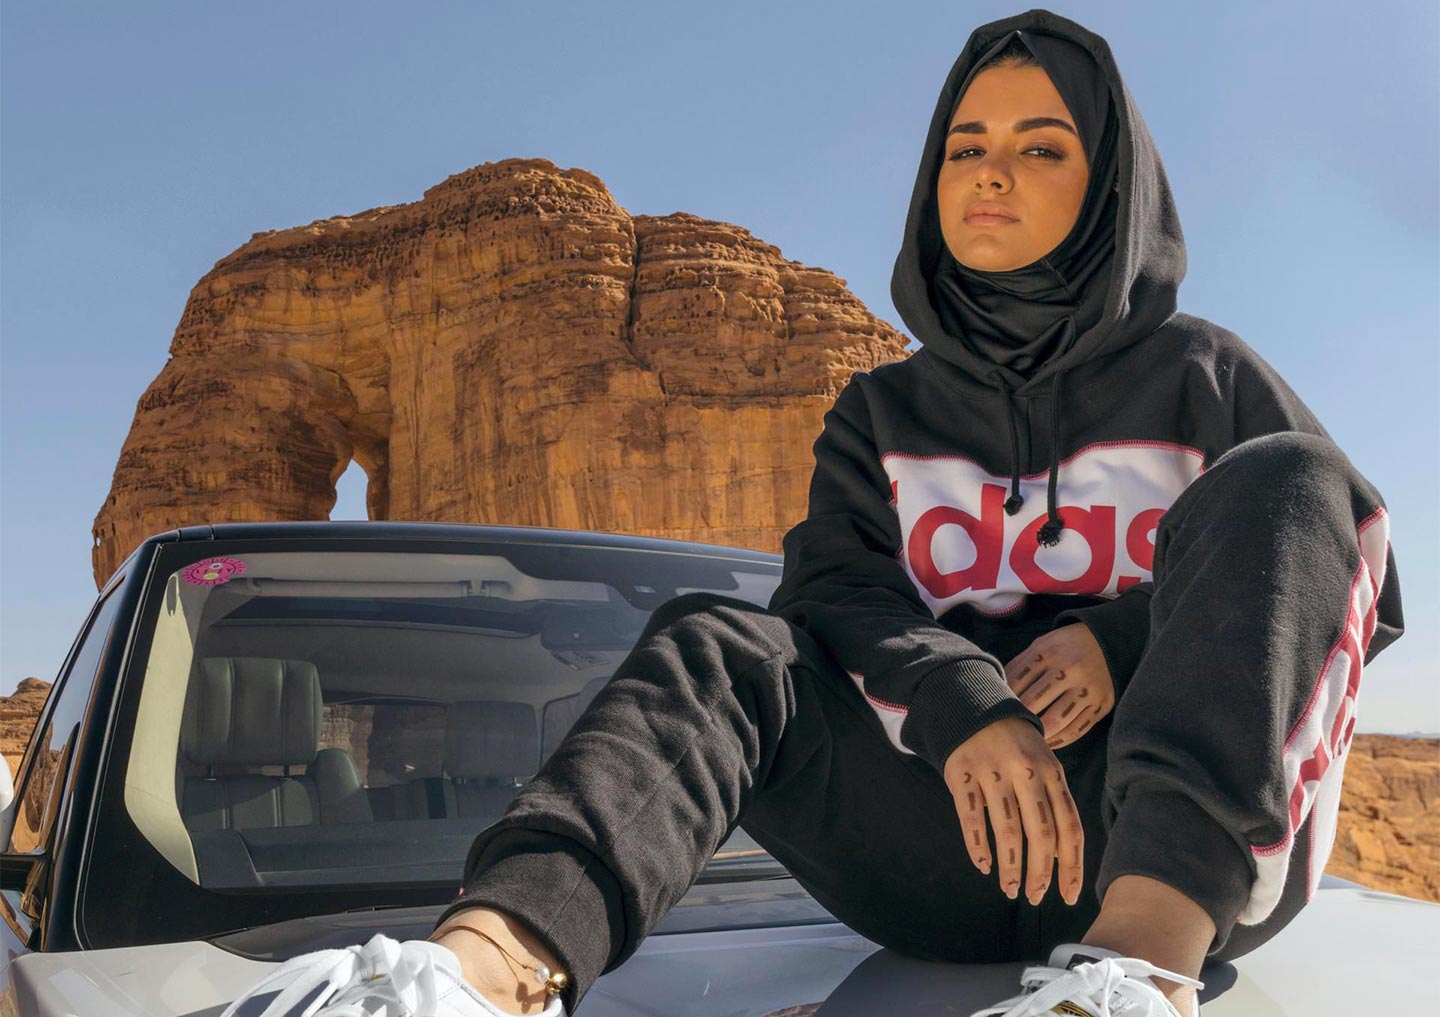 Adidas Originals shot its “Change is a Team Sport” campaign in Saudi Arabia